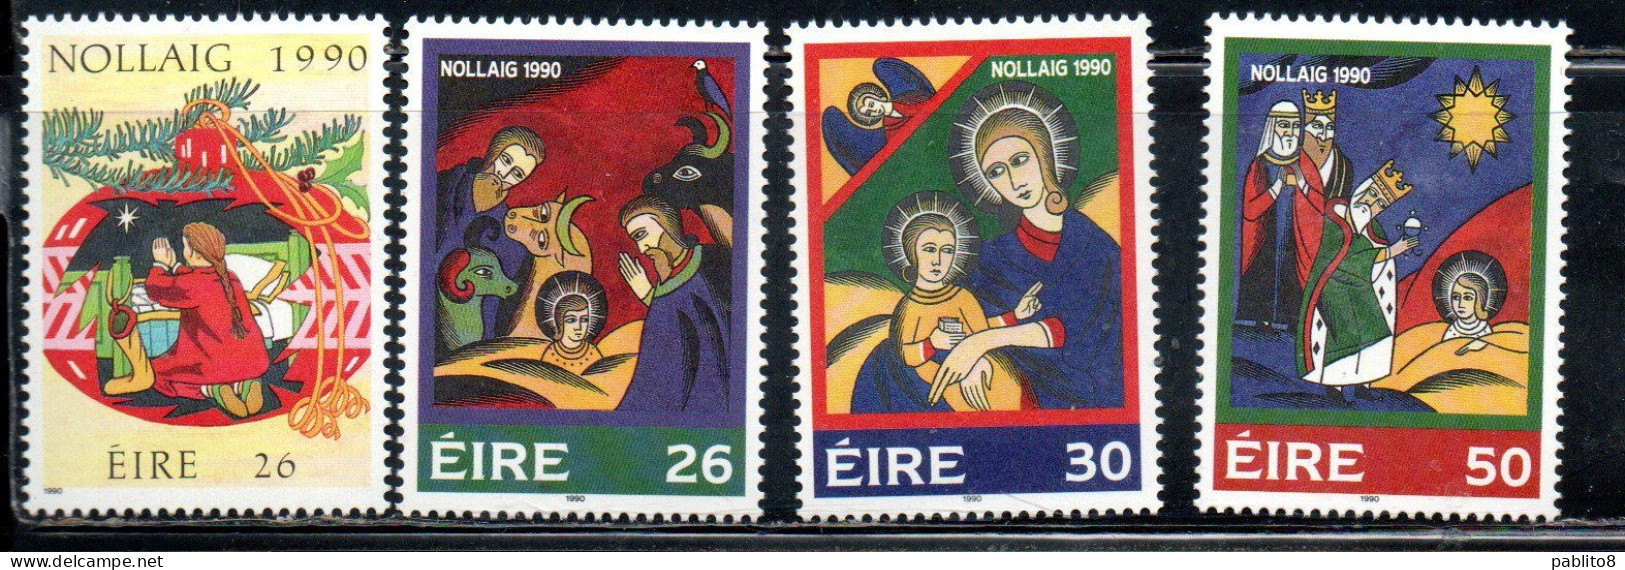 EIRE IRELAND IRLANDA 1990 CHRISTMAS ANNUNCIATION NOLLAIG NATALE NOEL WEIHNACHTEN NAVIDAD COMPLETE SET SERIE COMPLETA MNH - Unused Stamps